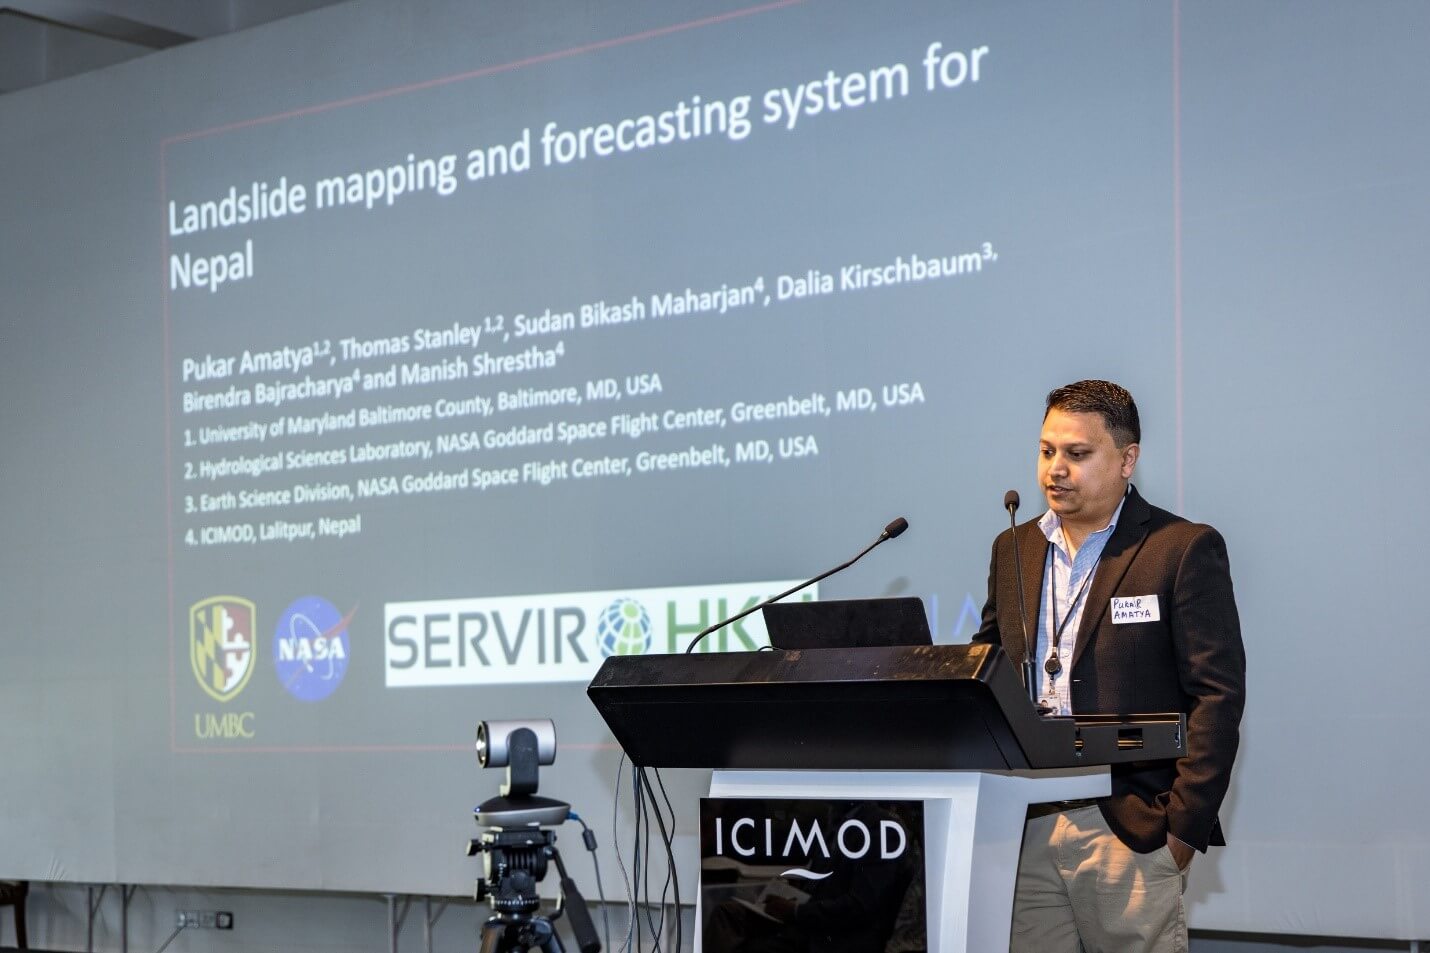 Pukar Amatya, NASA GSFC, presents the landslide mapping and forecasting system